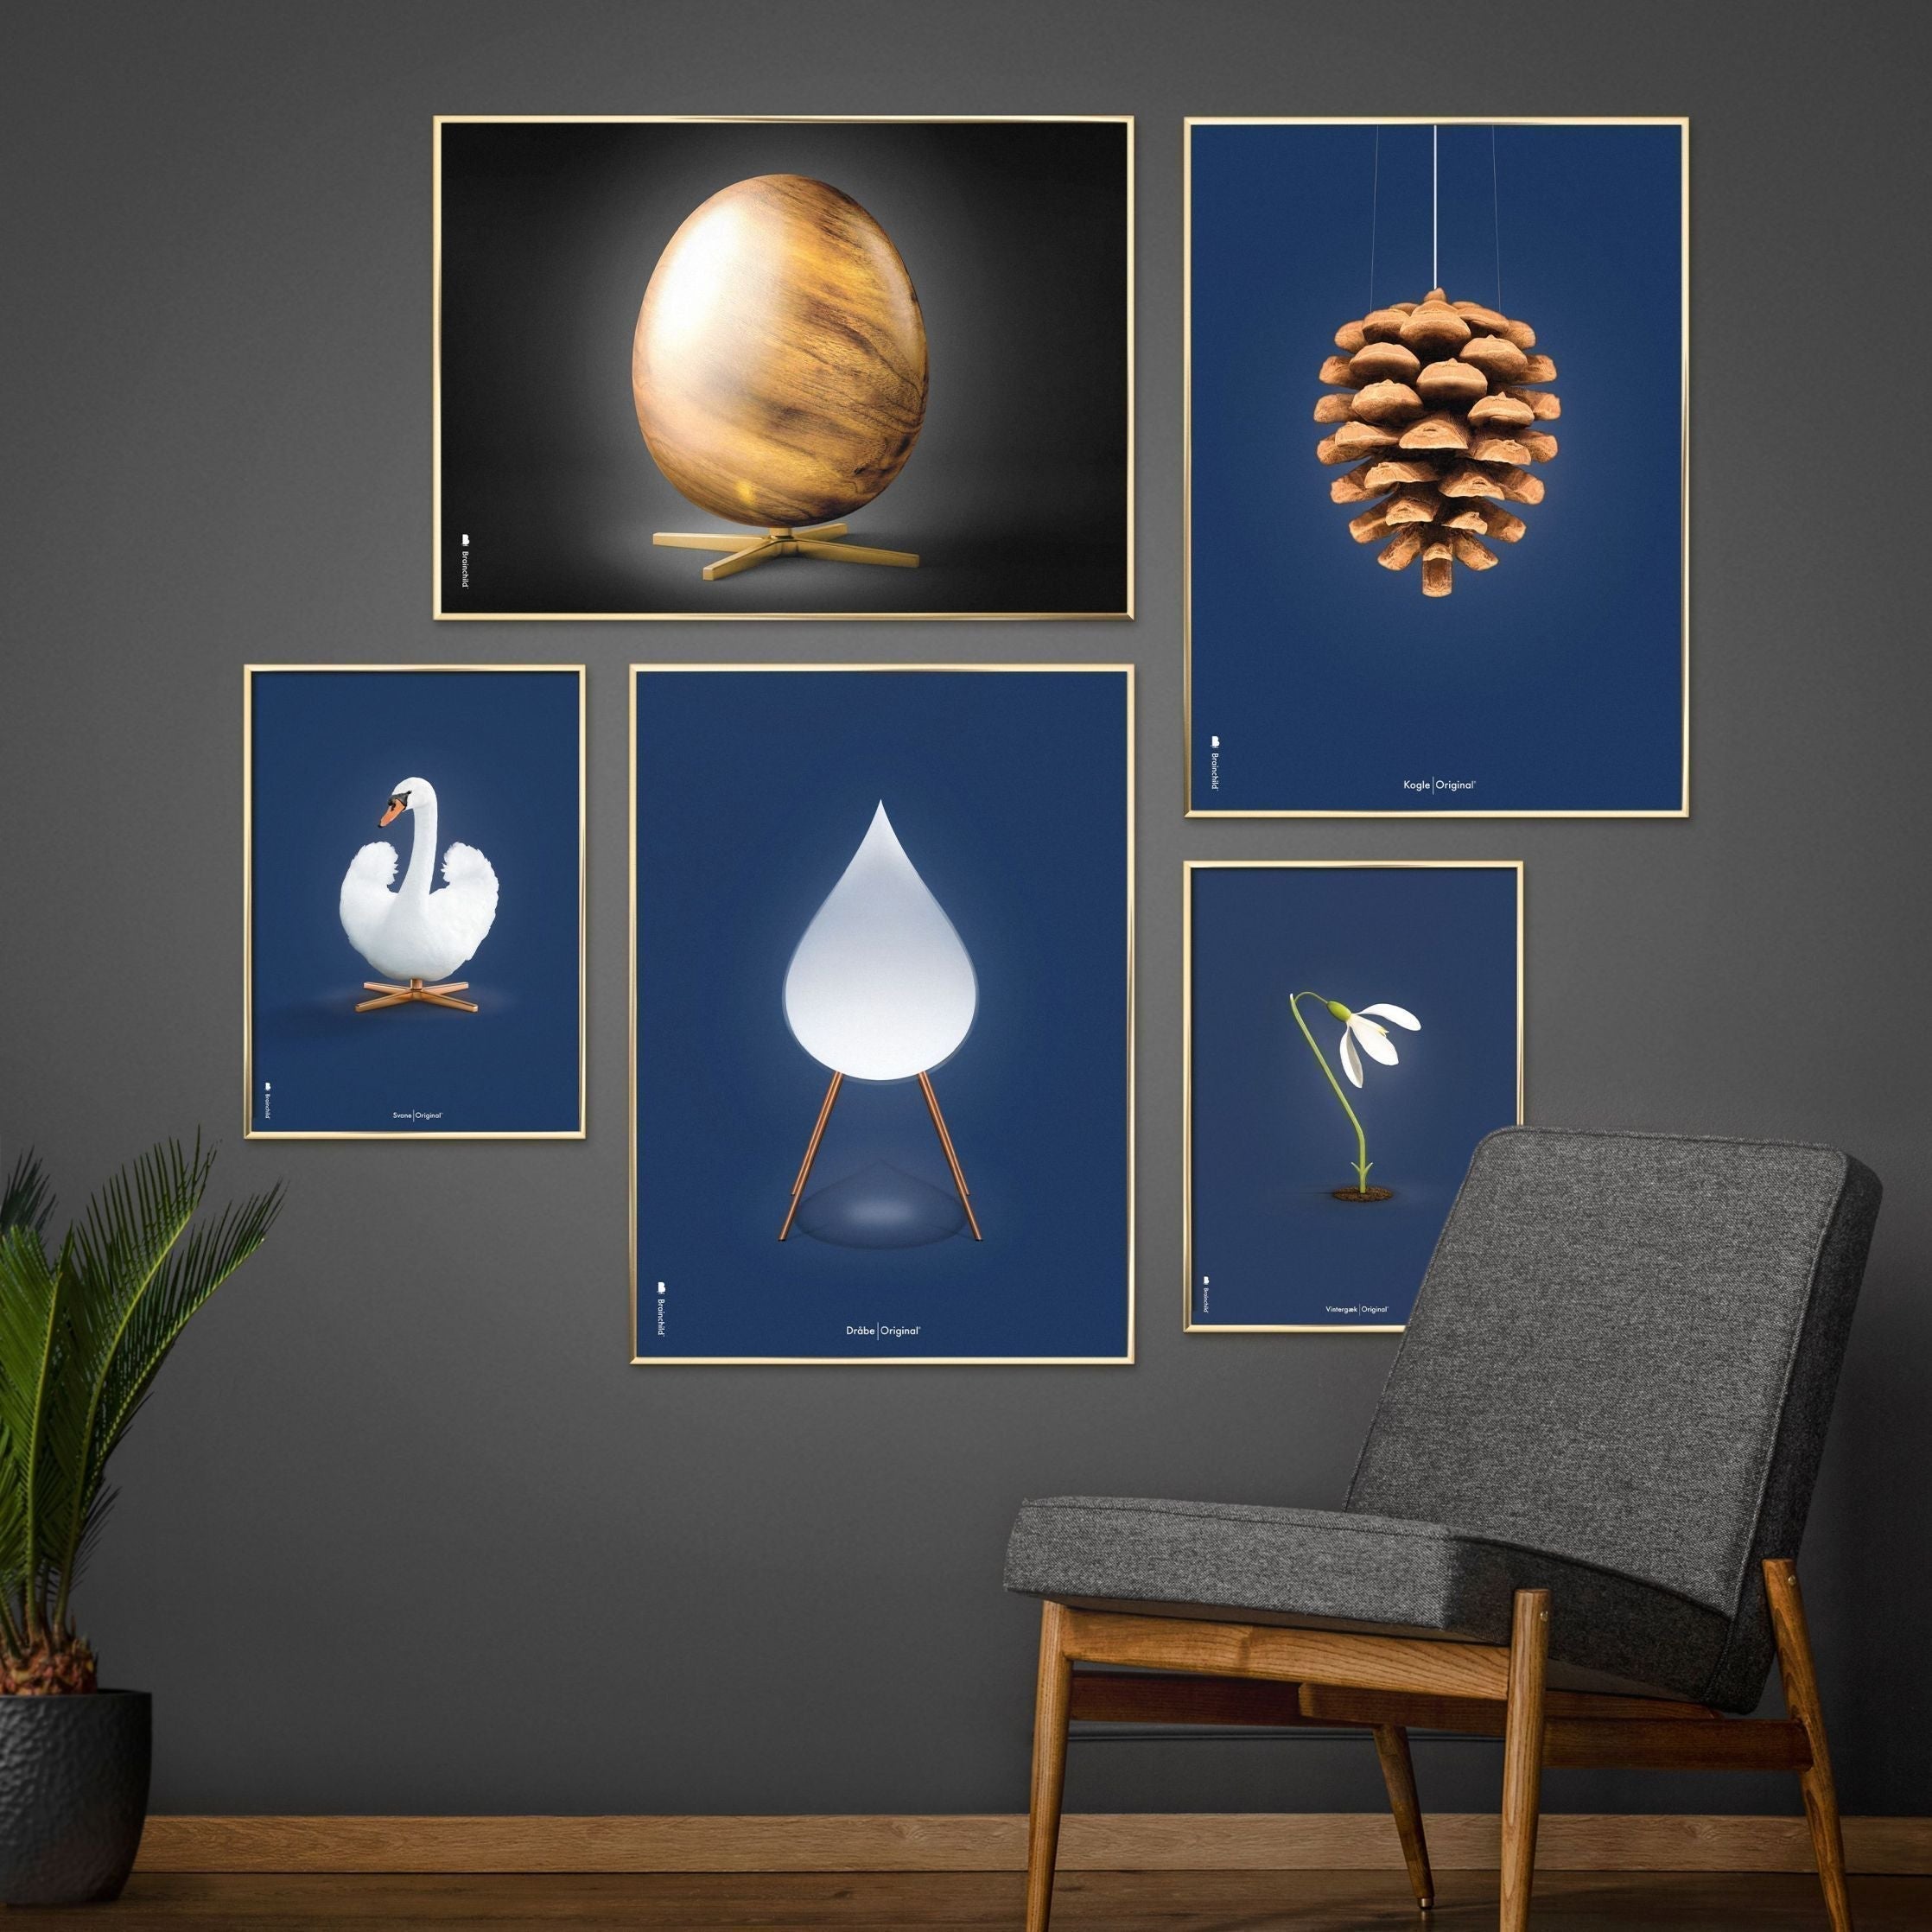 Brainchild Pine Cone Classic Poster, Frame Made Of Light Wood 30x40 Cm, Dark Blue Background